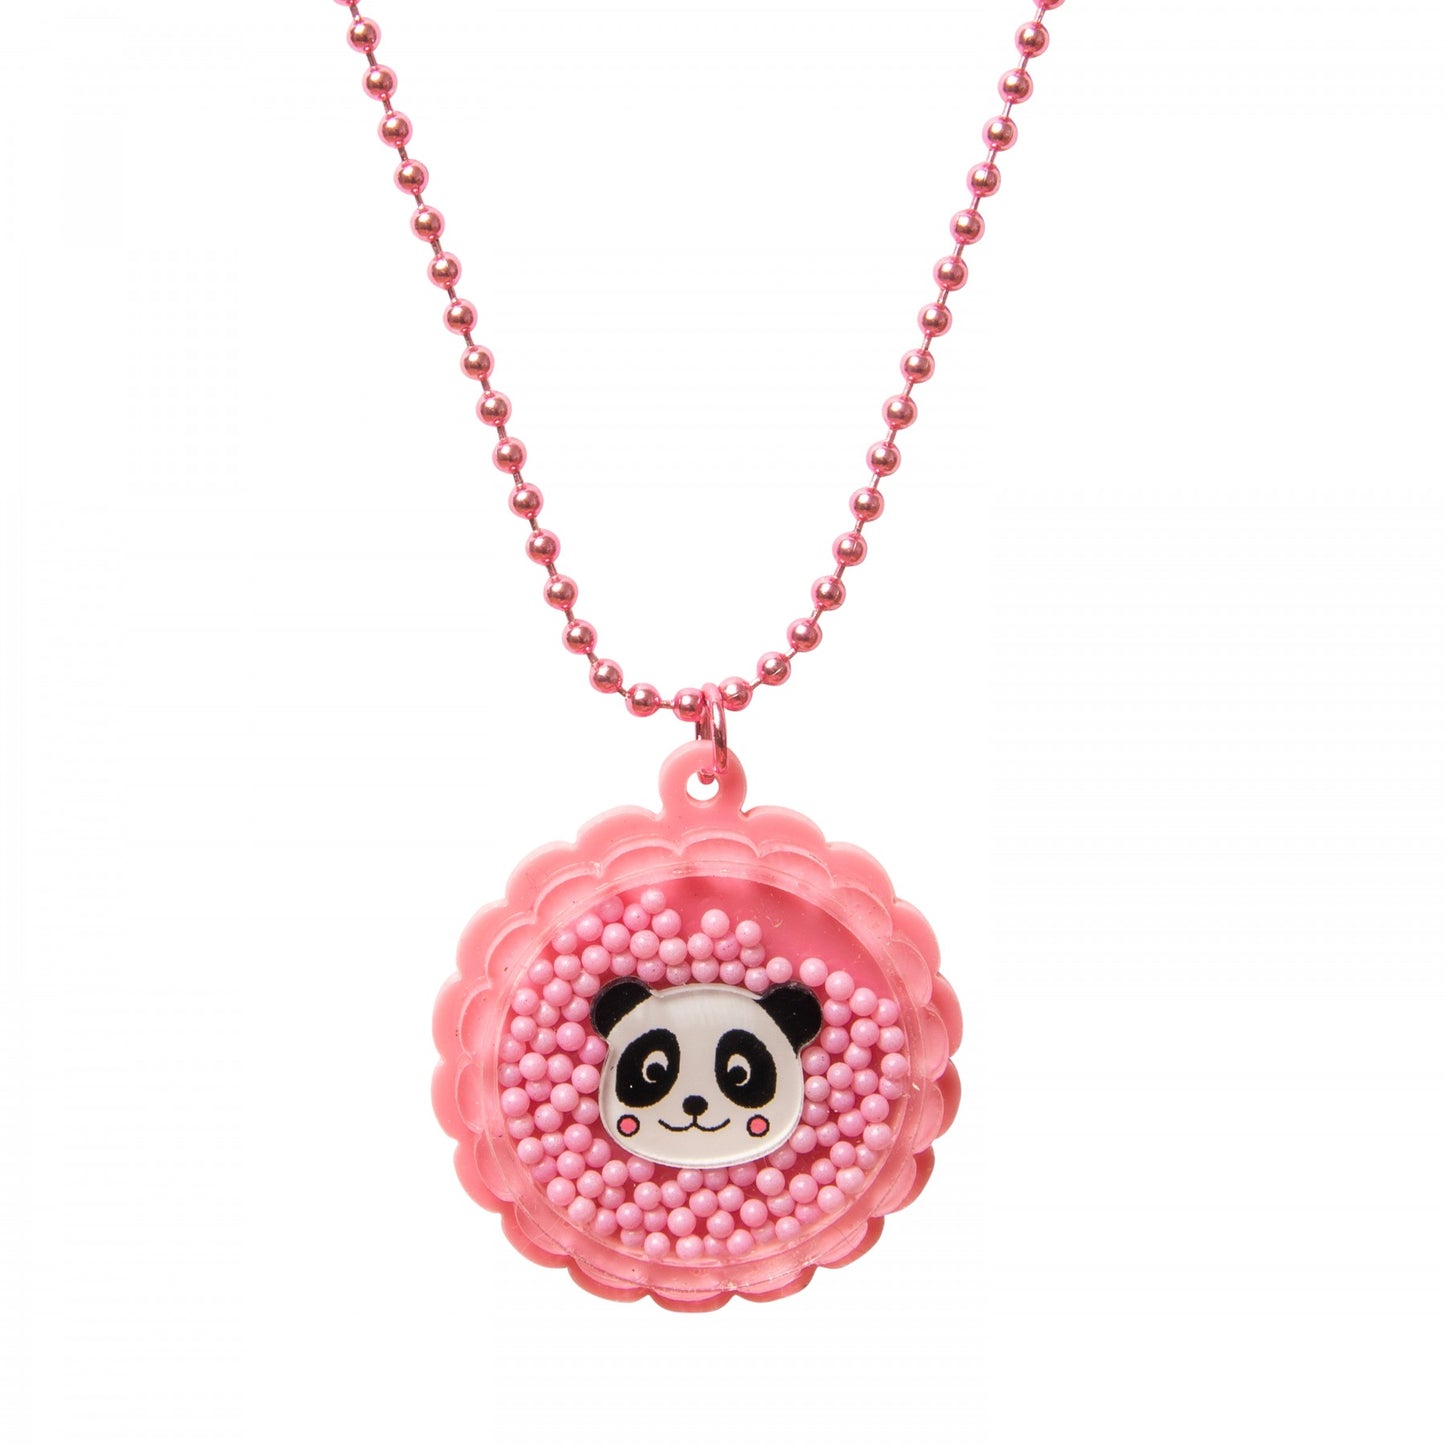 Acrylic Bead Necklace: Panda Bear